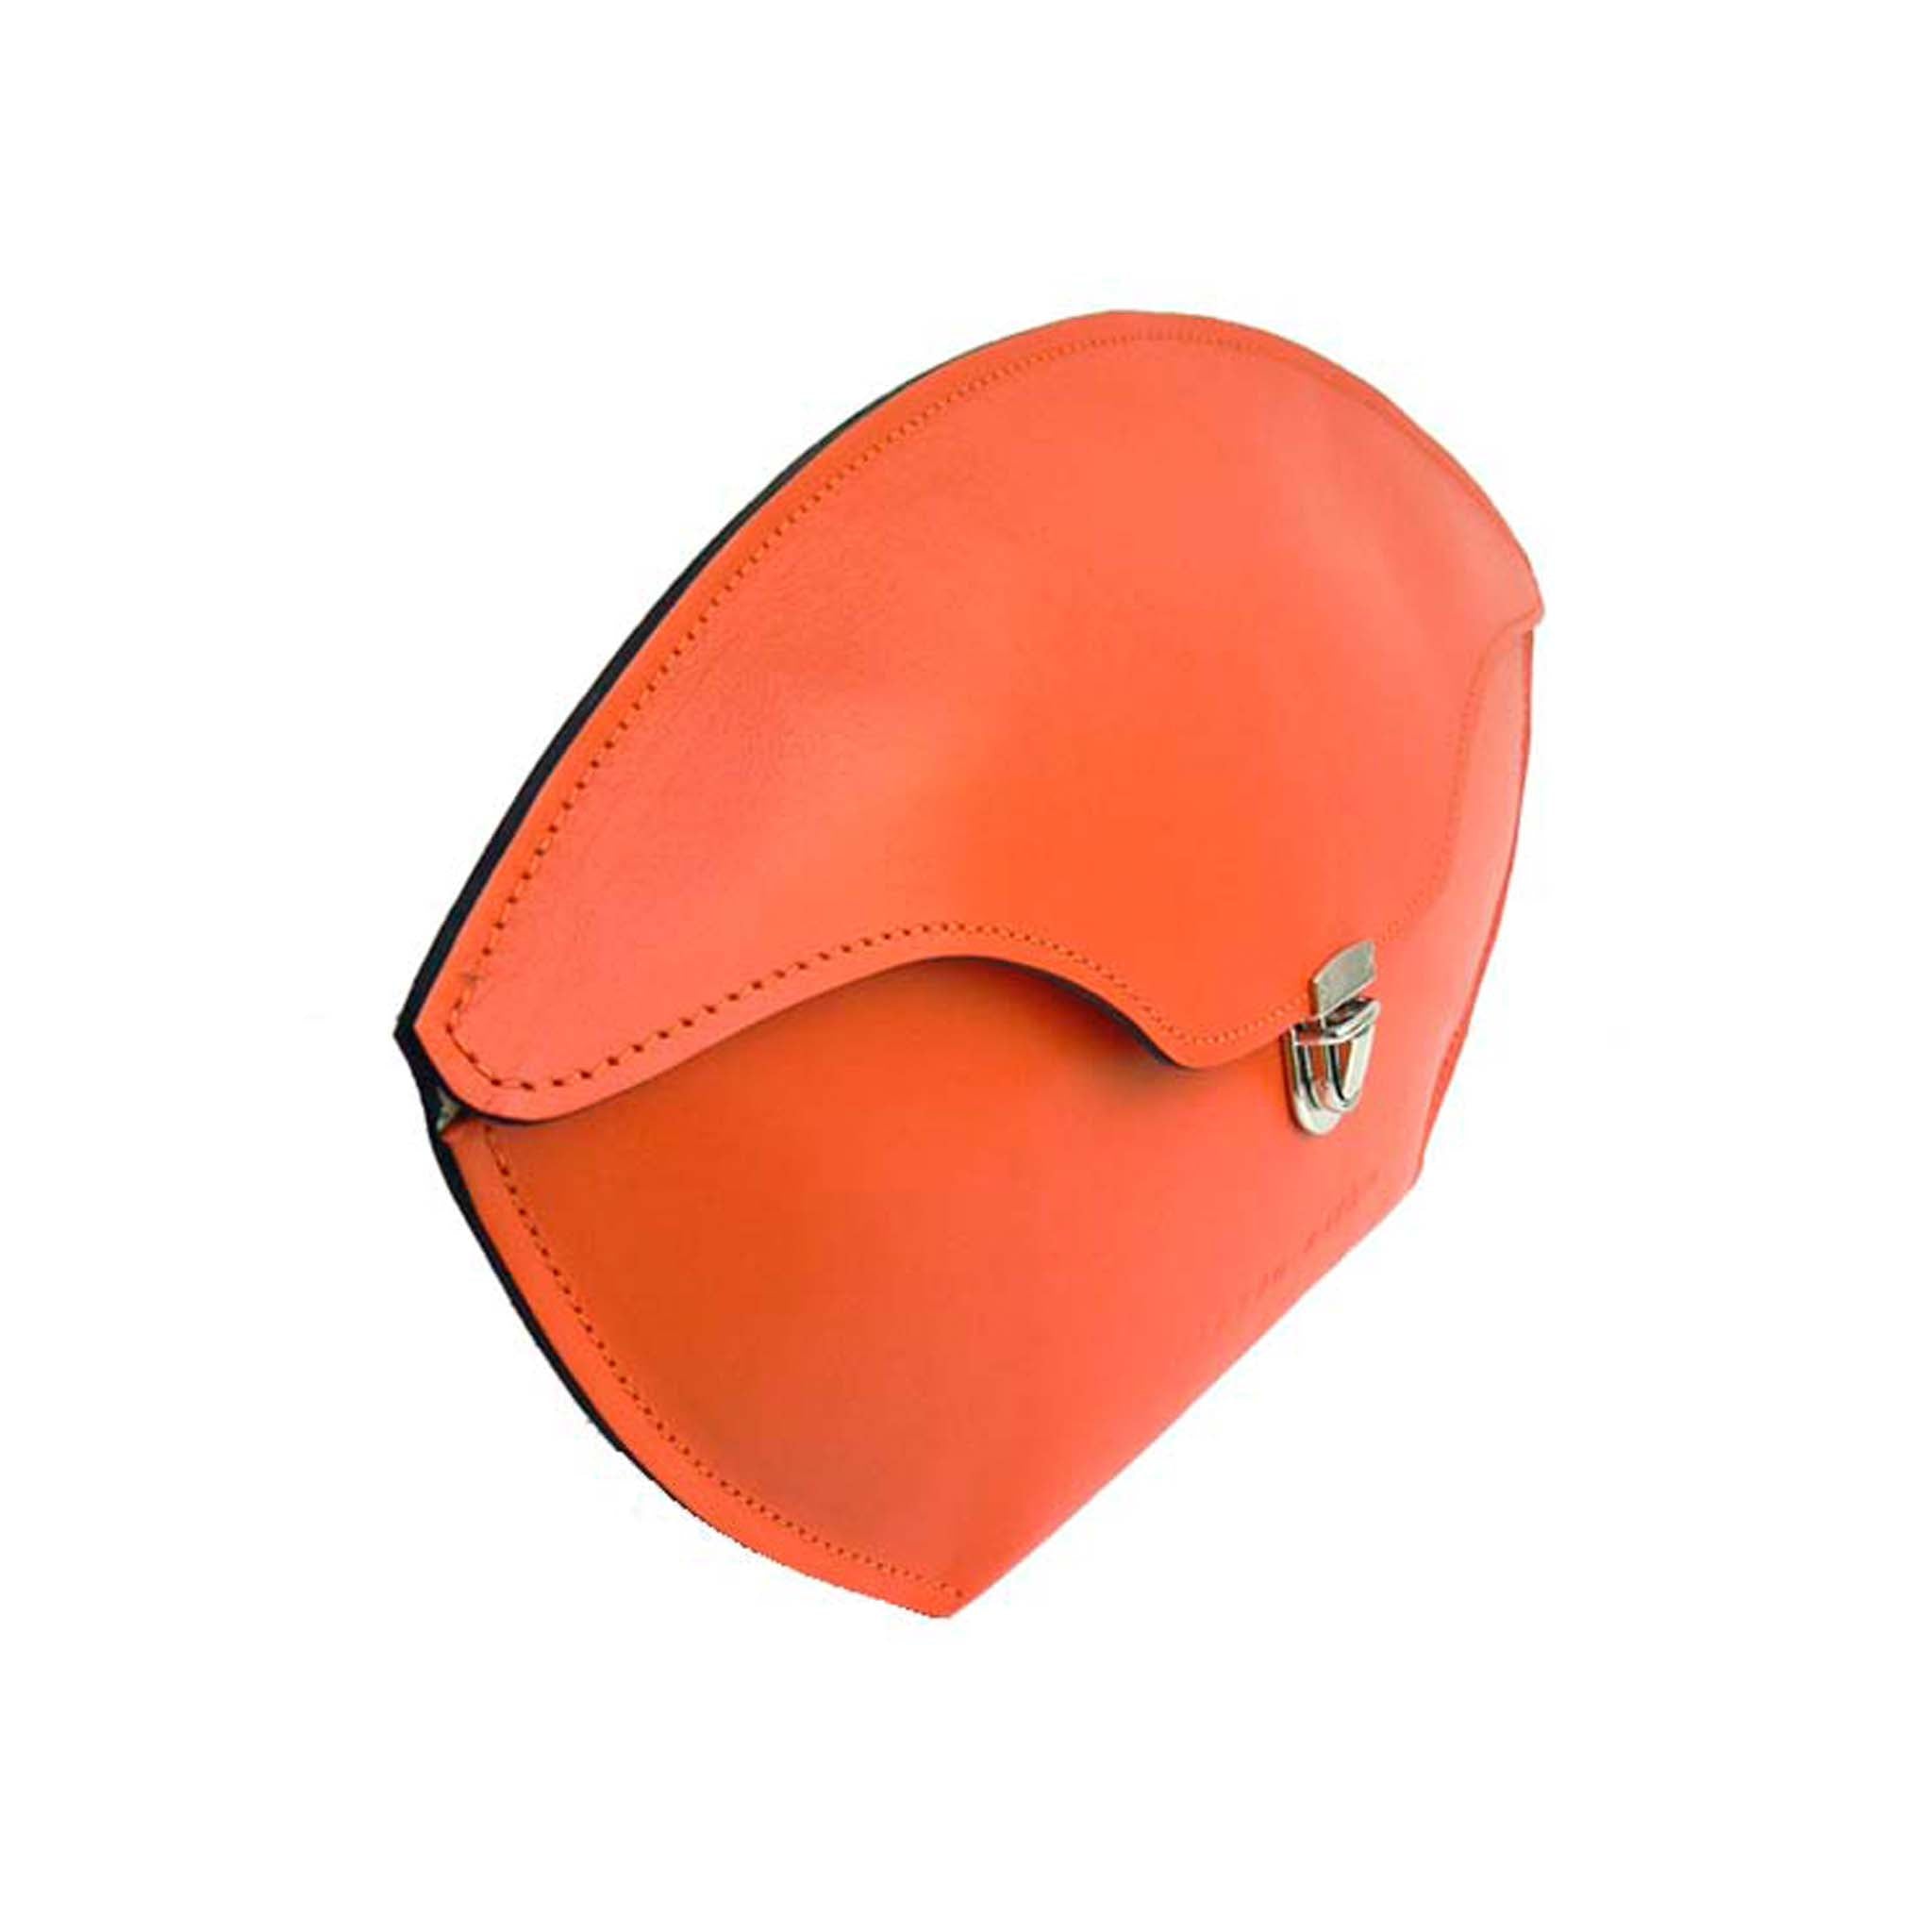 Orange Clutch Bag with Strap